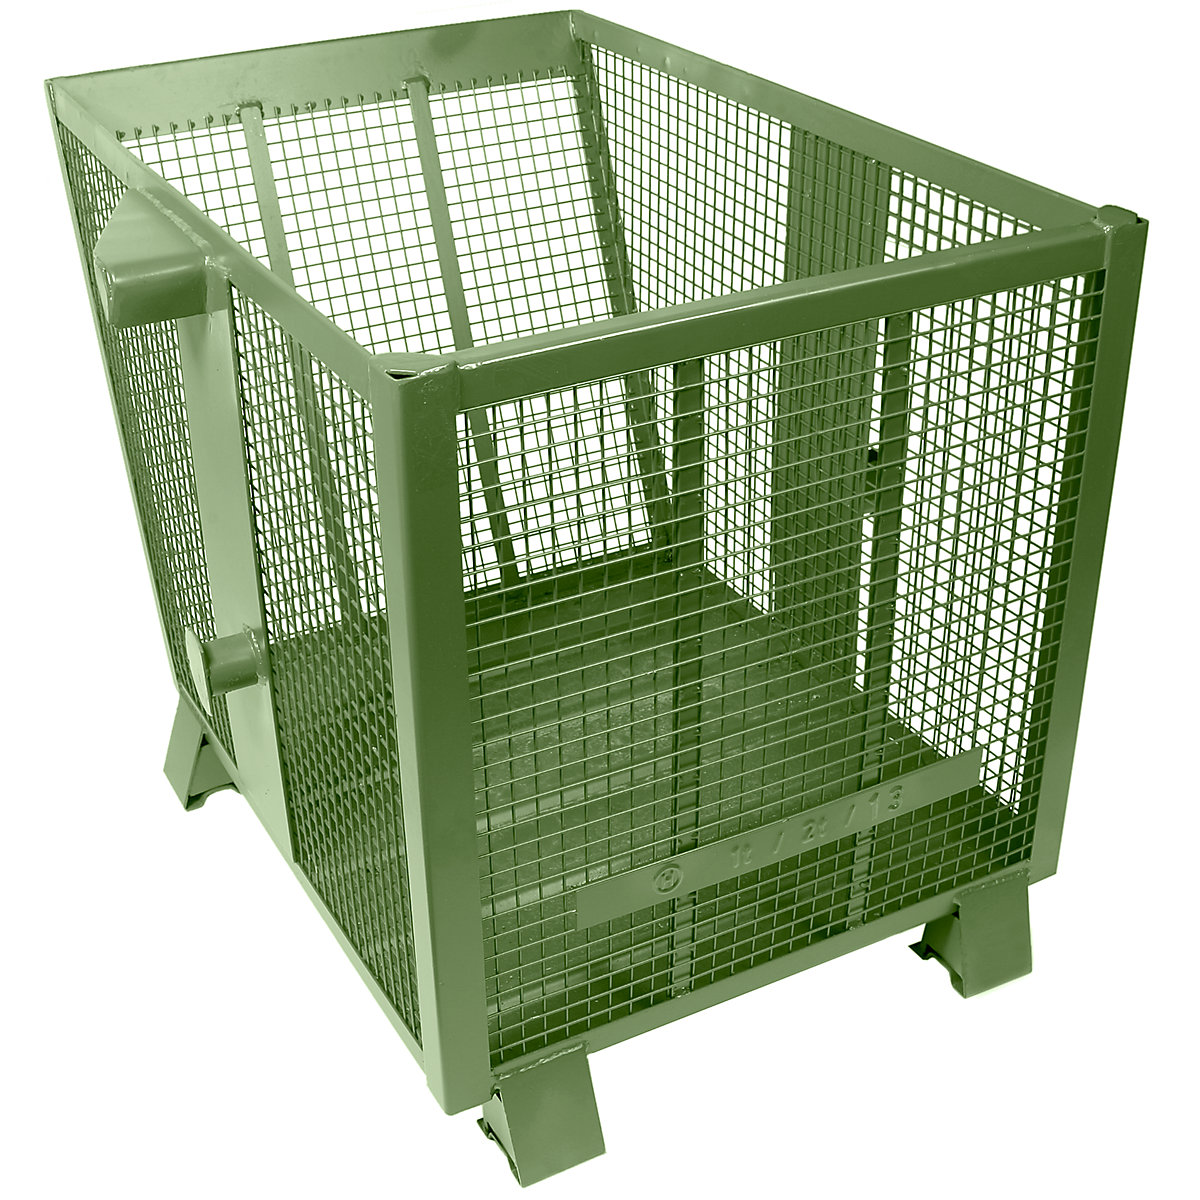 Mriežkový vyklápací kontajner – Heson, objem 0,6 m³, zelená RAL 6011-5